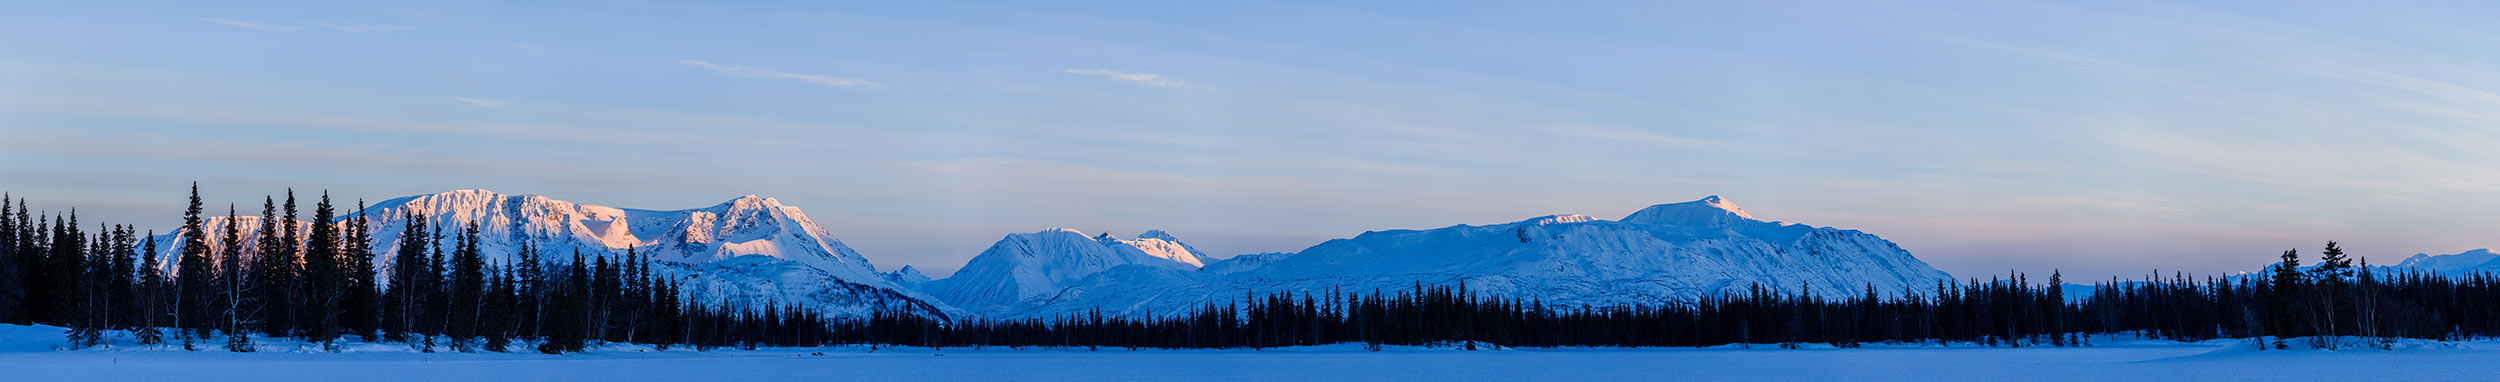 Finger Lake Alaska Iditarod Trail Mountain Large Format Landscape Panoramic